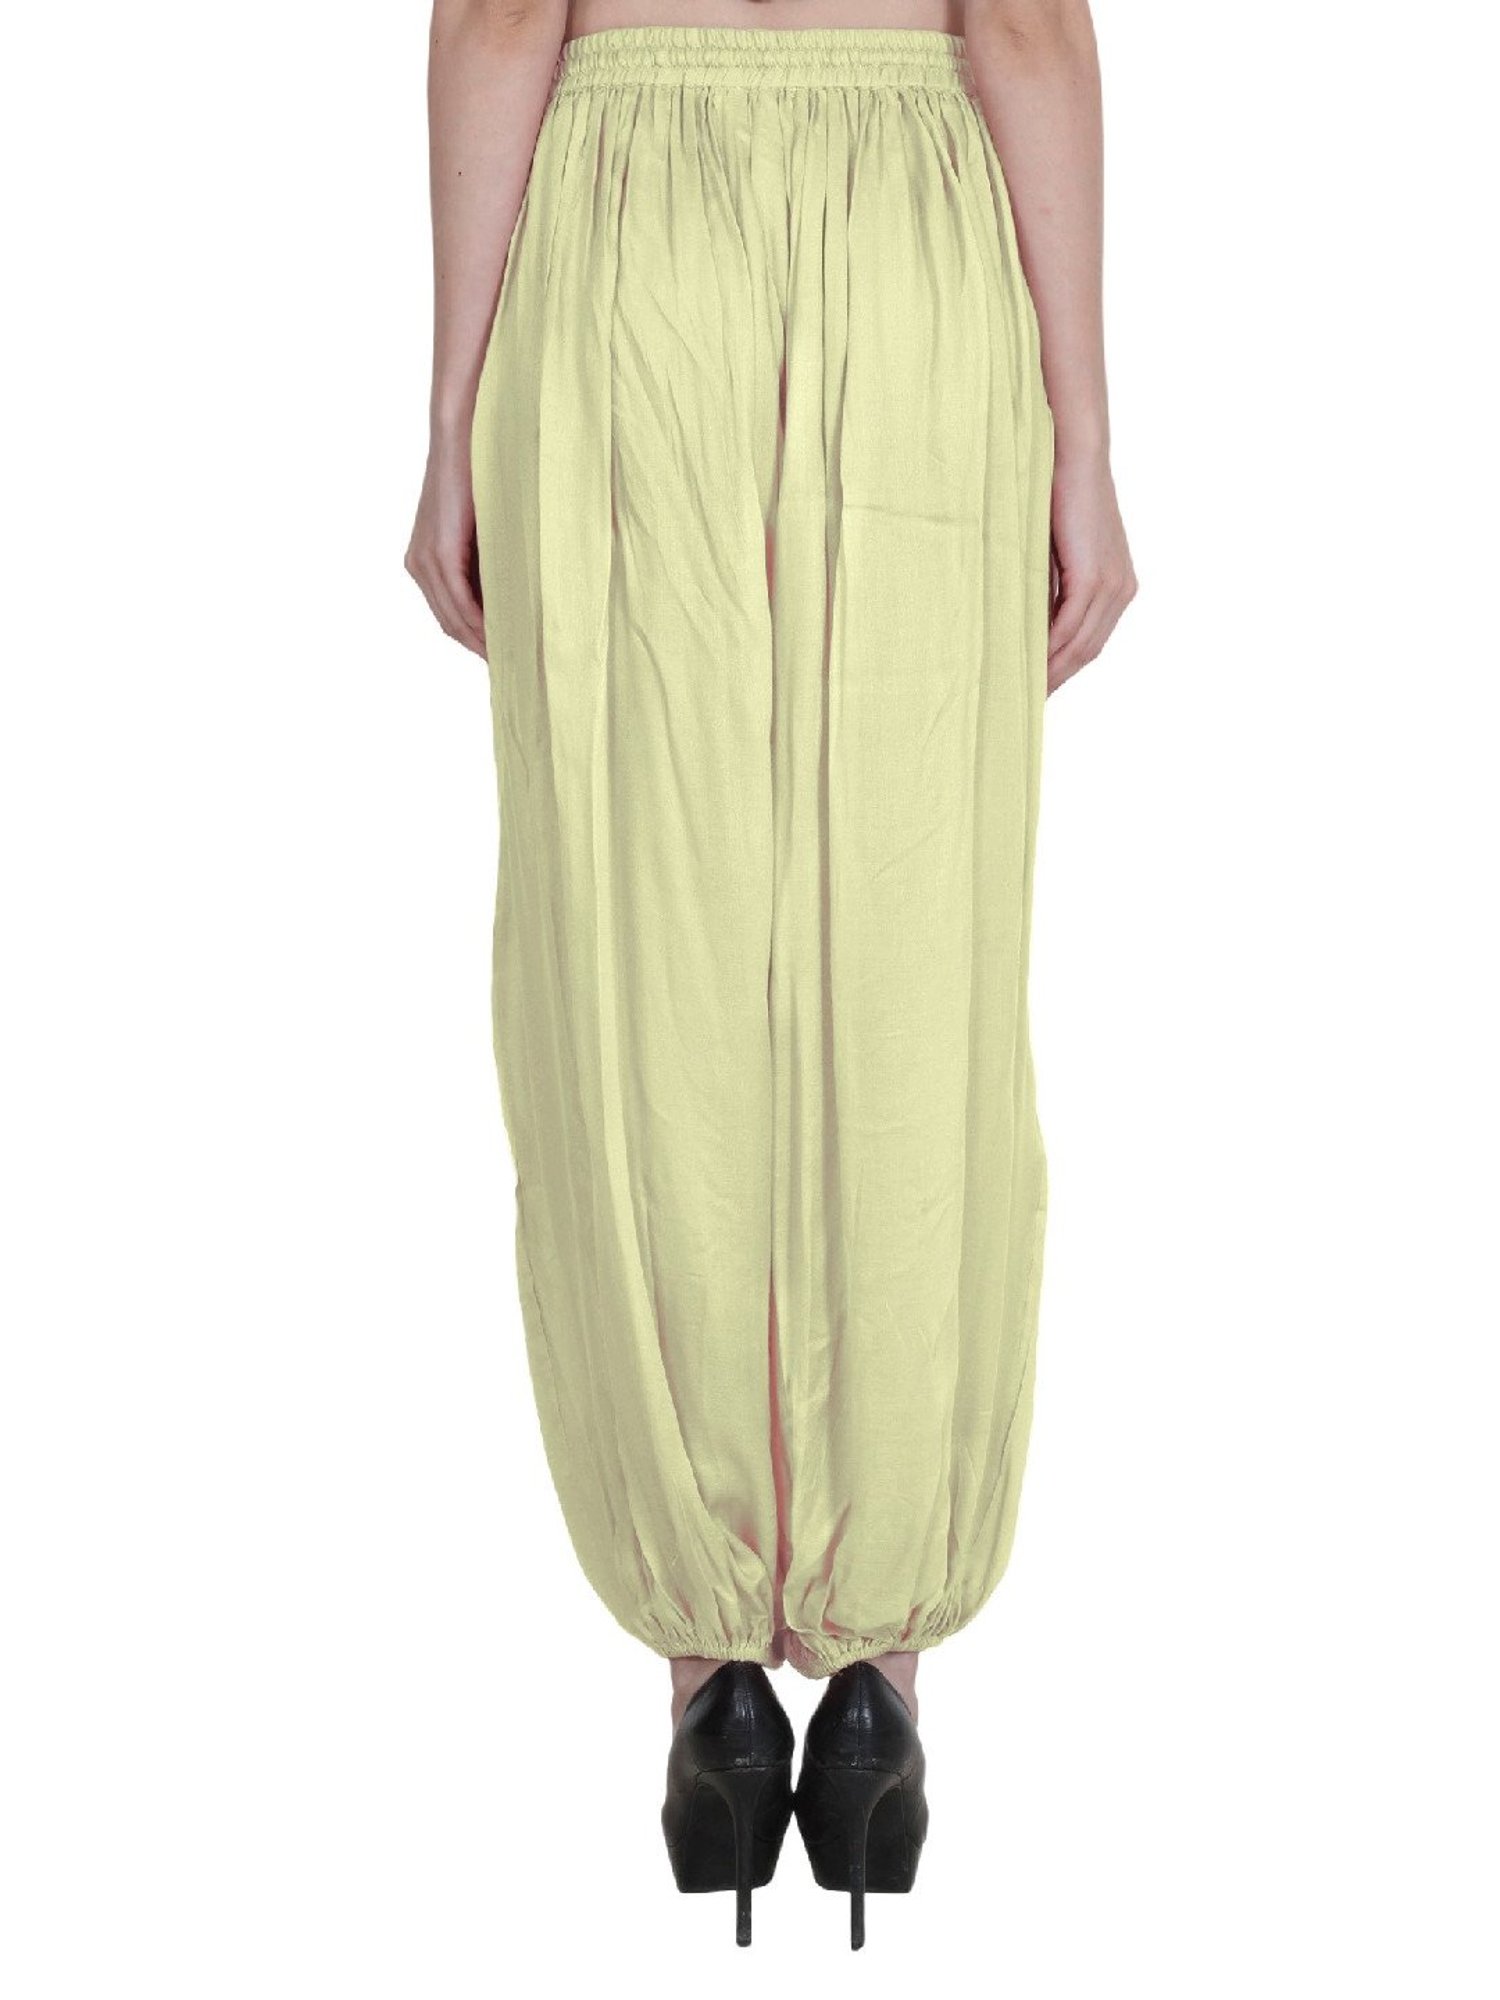 Solid Cream Haremyoga Pant For Women  Premium Ecofriendly Cotton Waist  Size Free Size